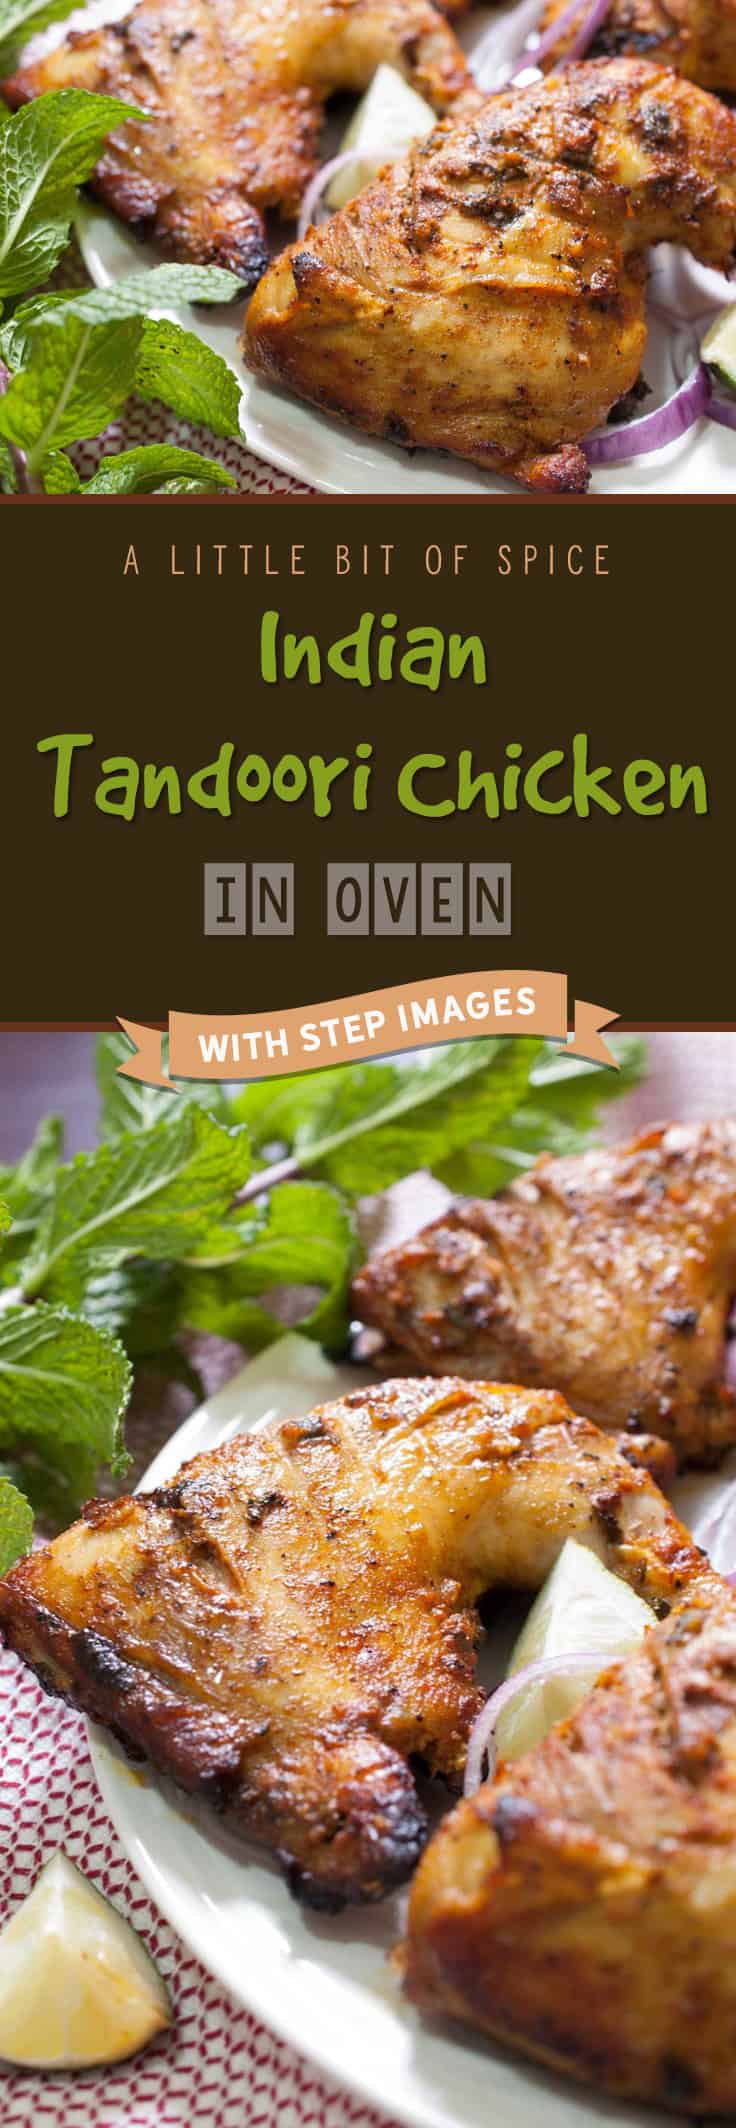 Tandoori_Chicken_In_Oven